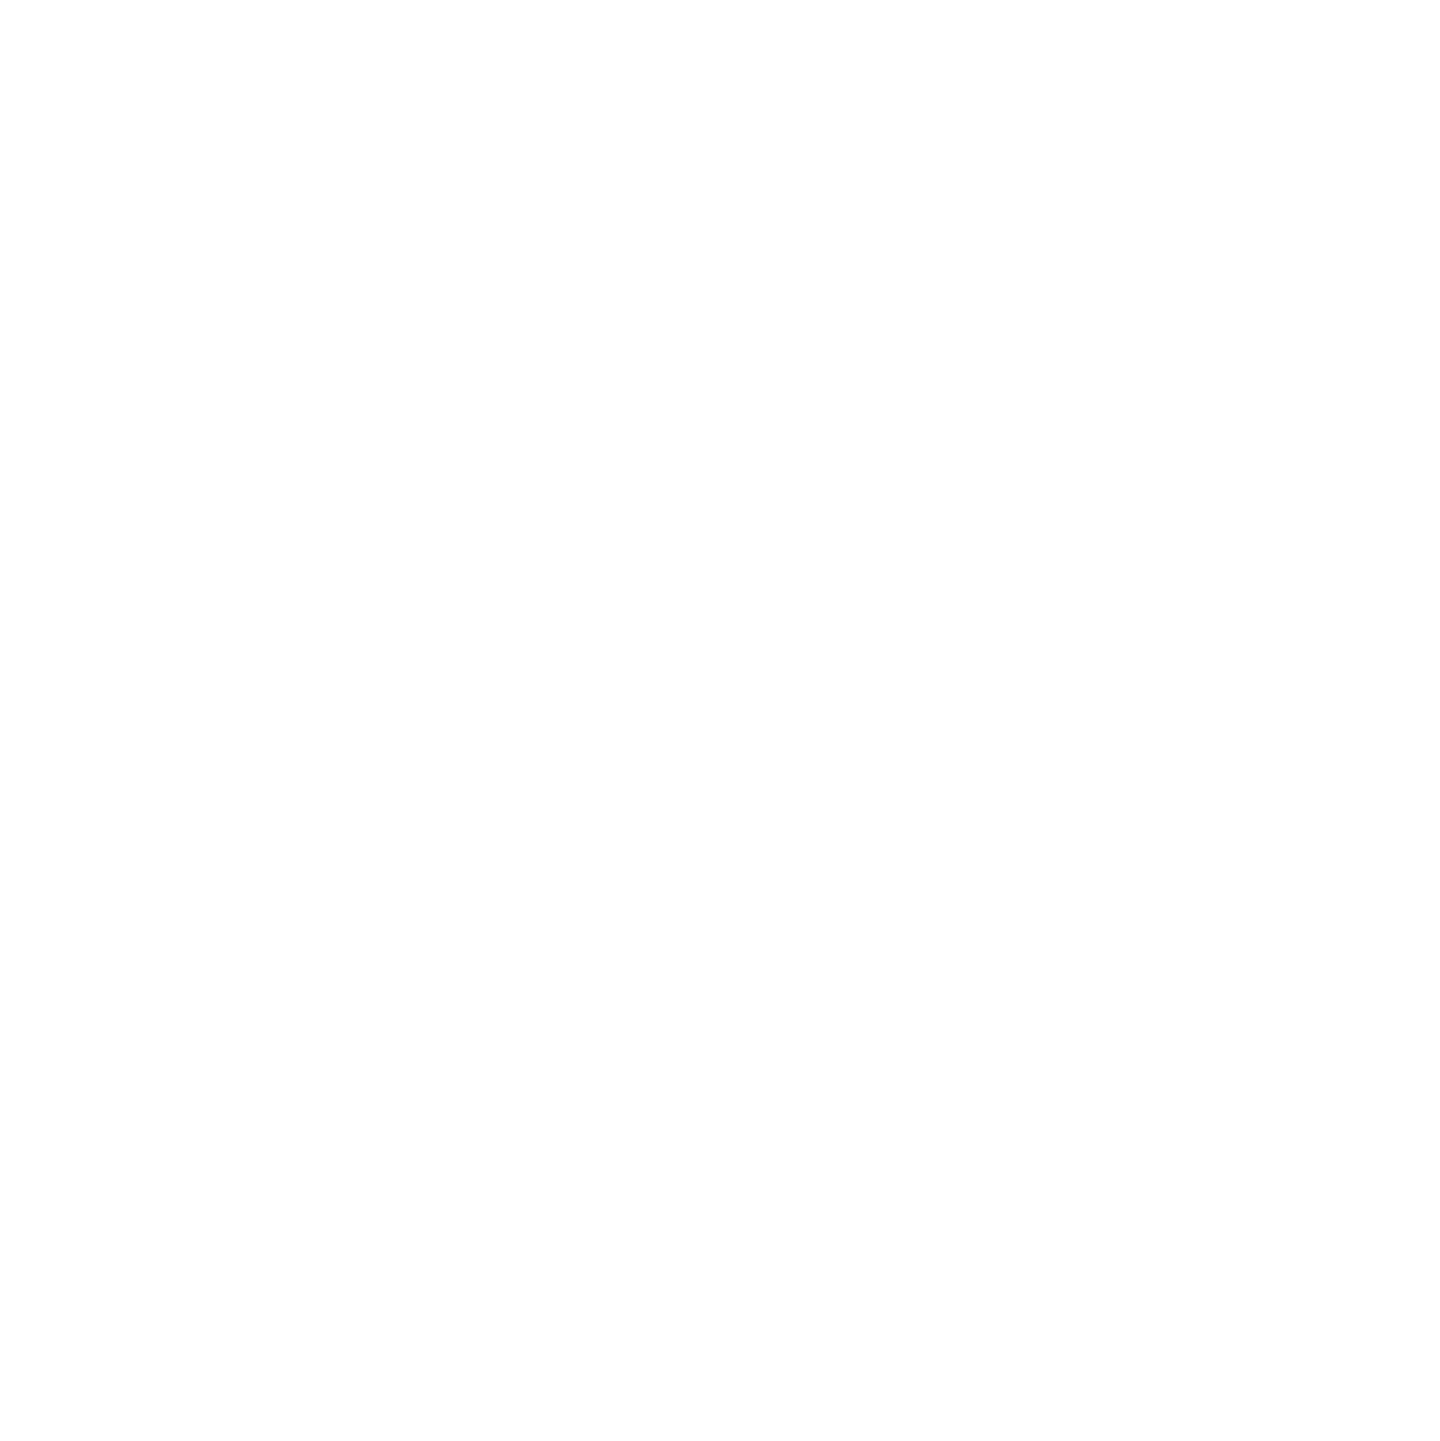 The Forbes Family Farm